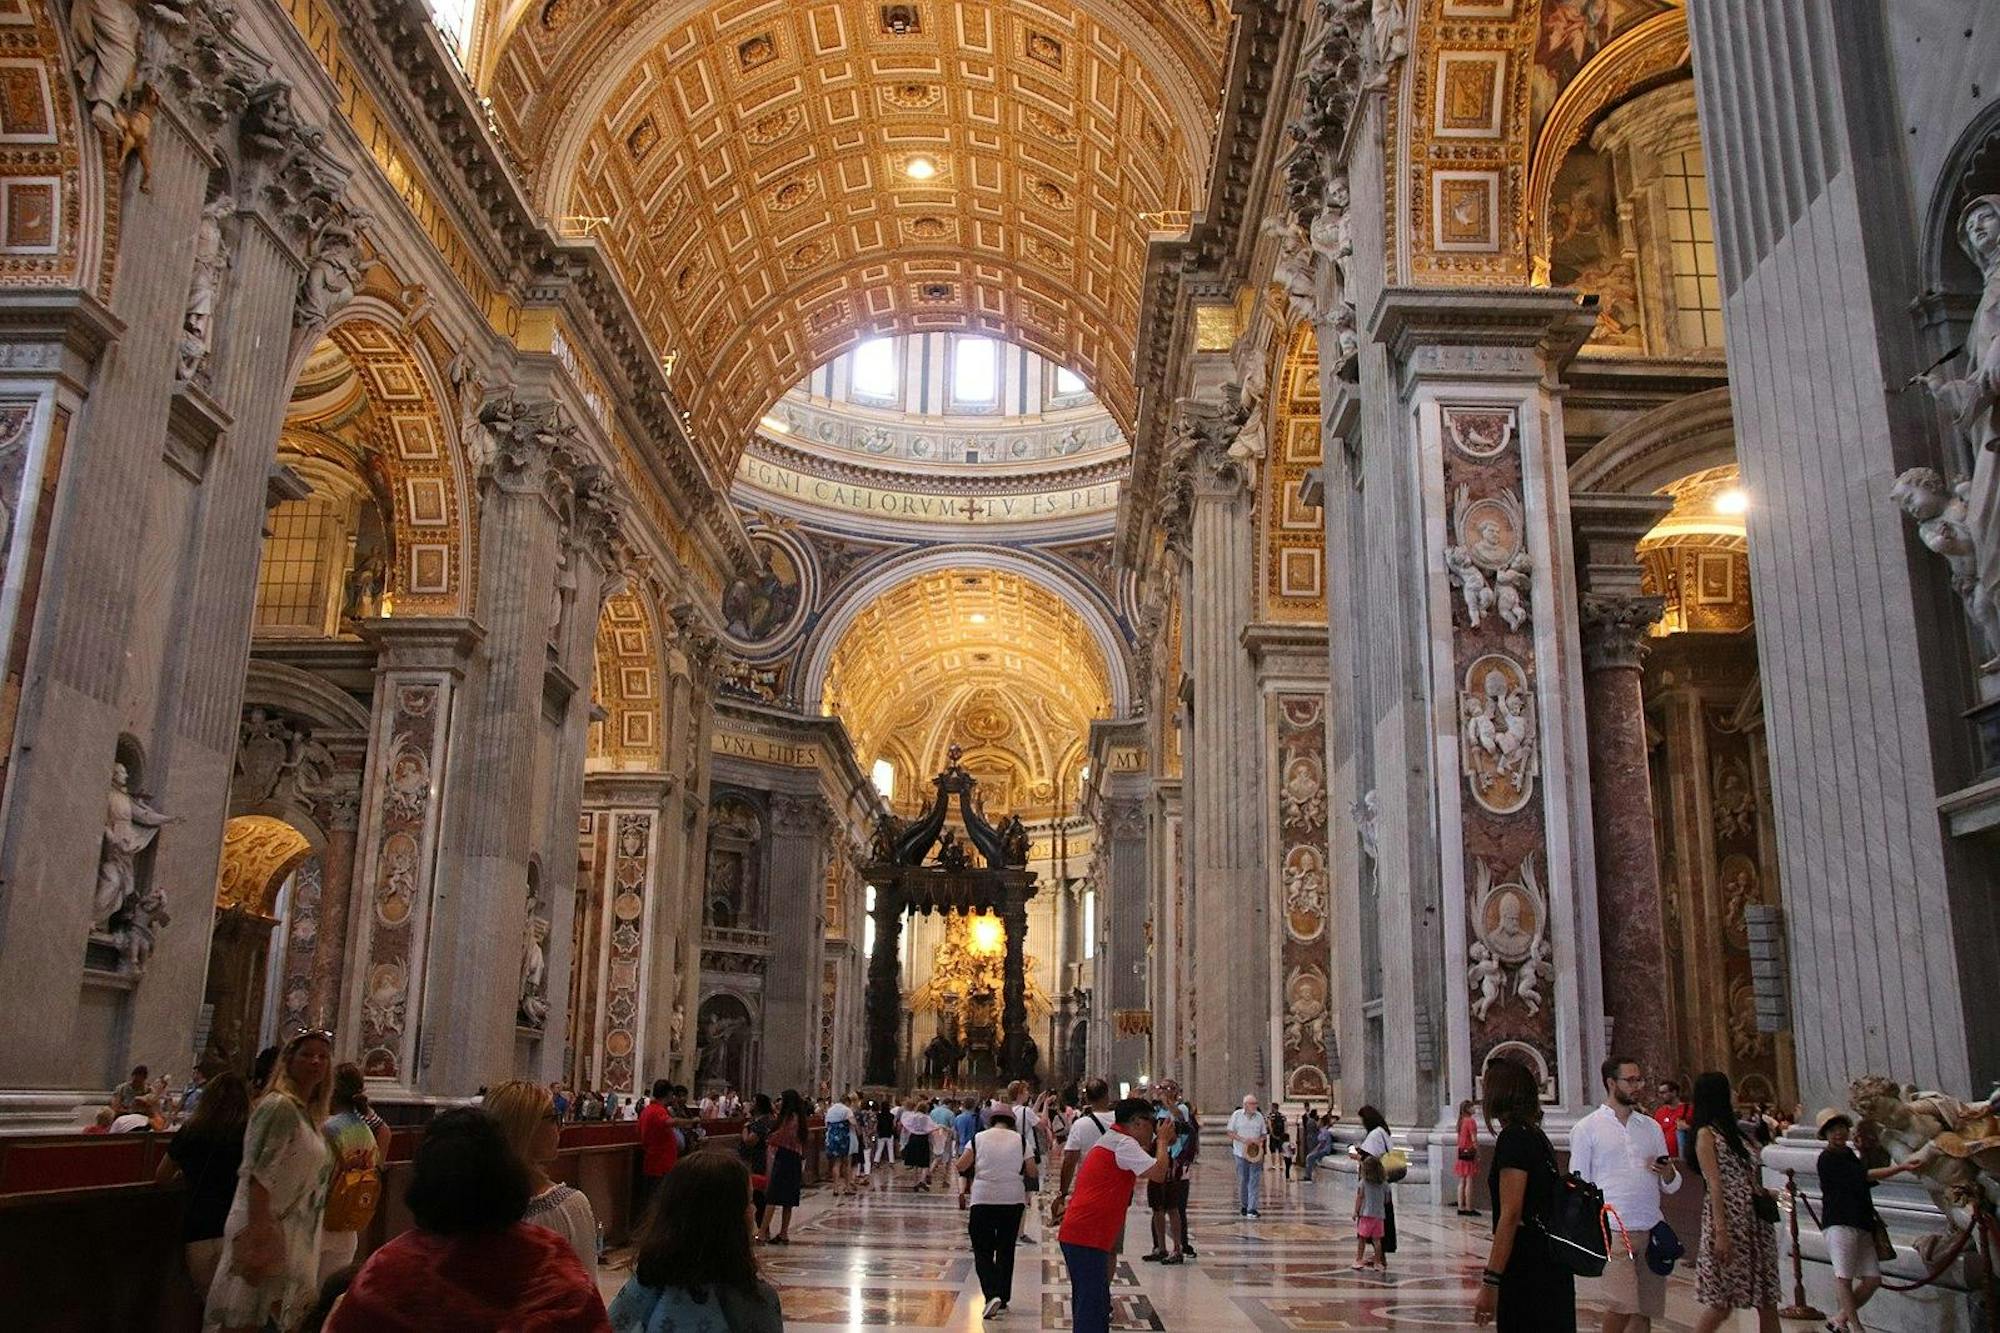 St._Peter's_Basilica,_Vatican_City_(48466540541).jpg